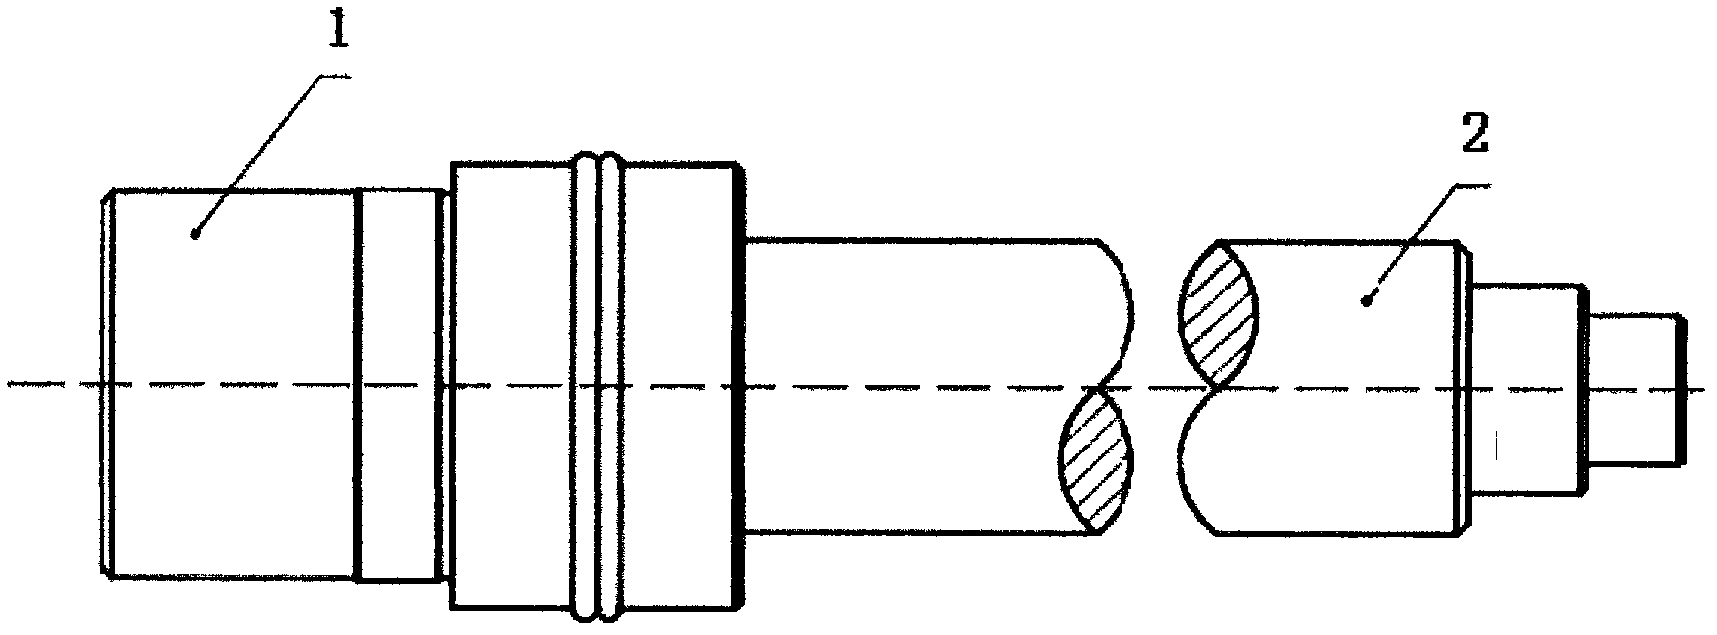 Internal spline shaft and preparation method thereof